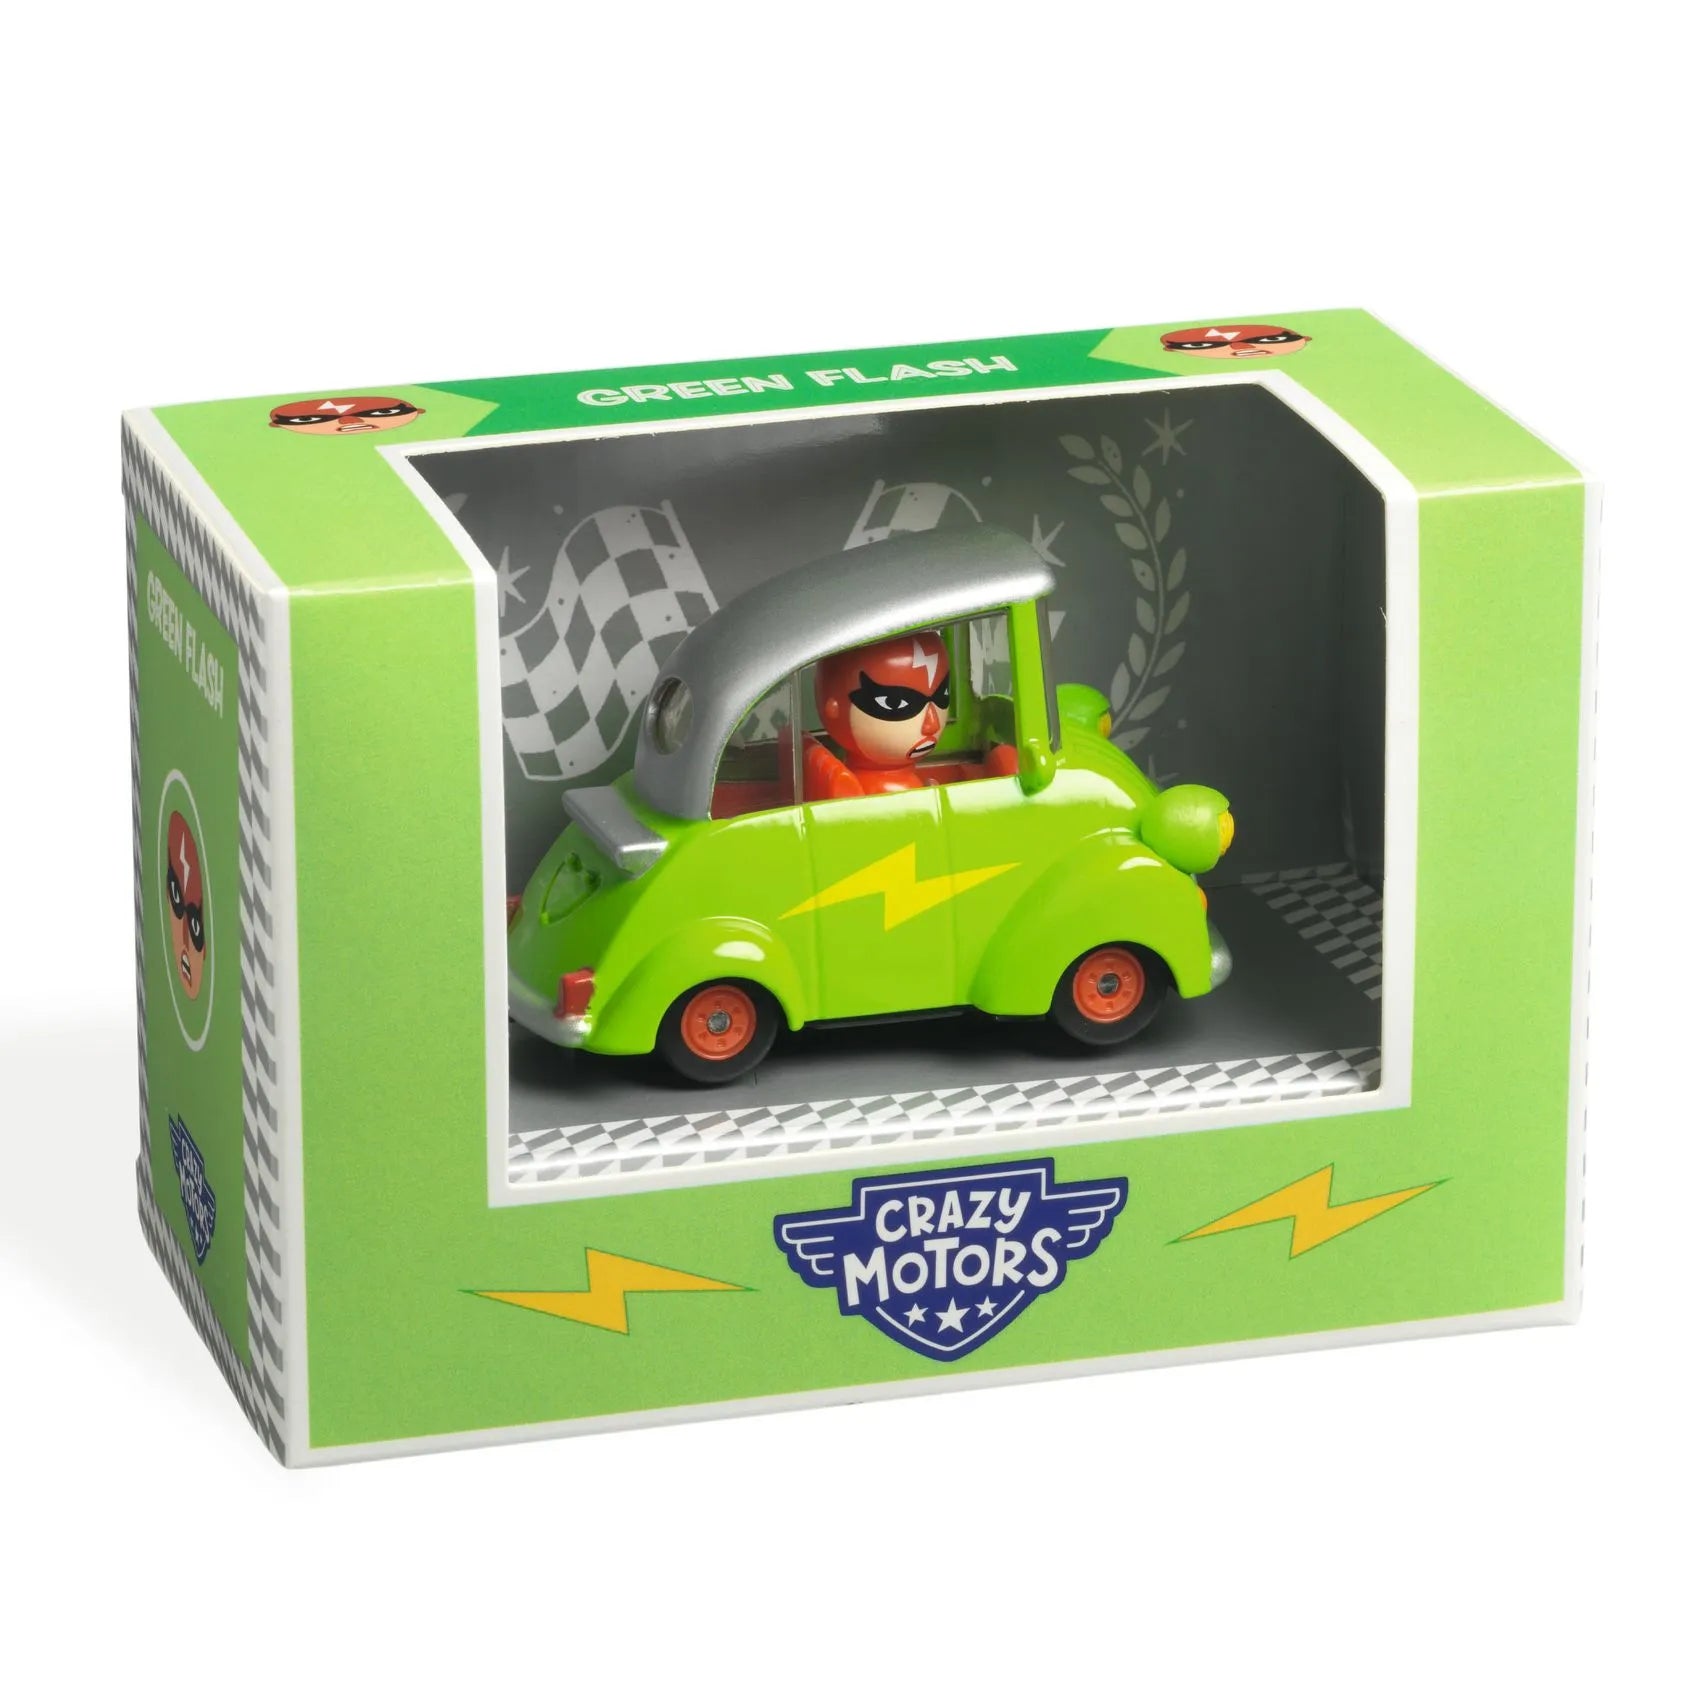 Djeco Crazy Motors Toy Car For Kids – Green Flash